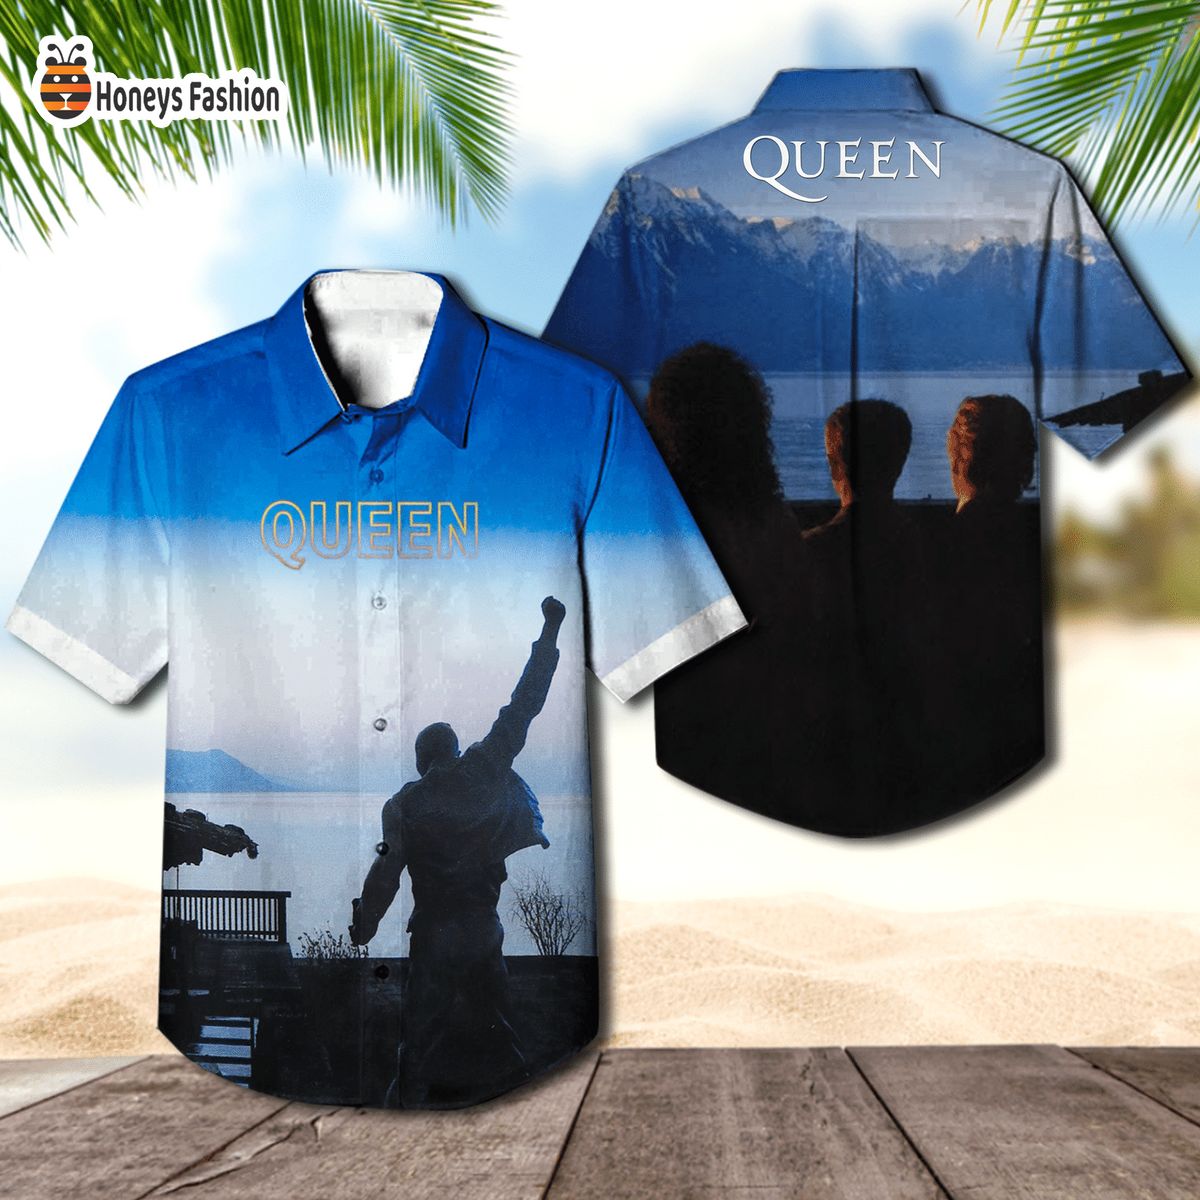 Queen band made in heaven 1995 album cover hawaiian shirt